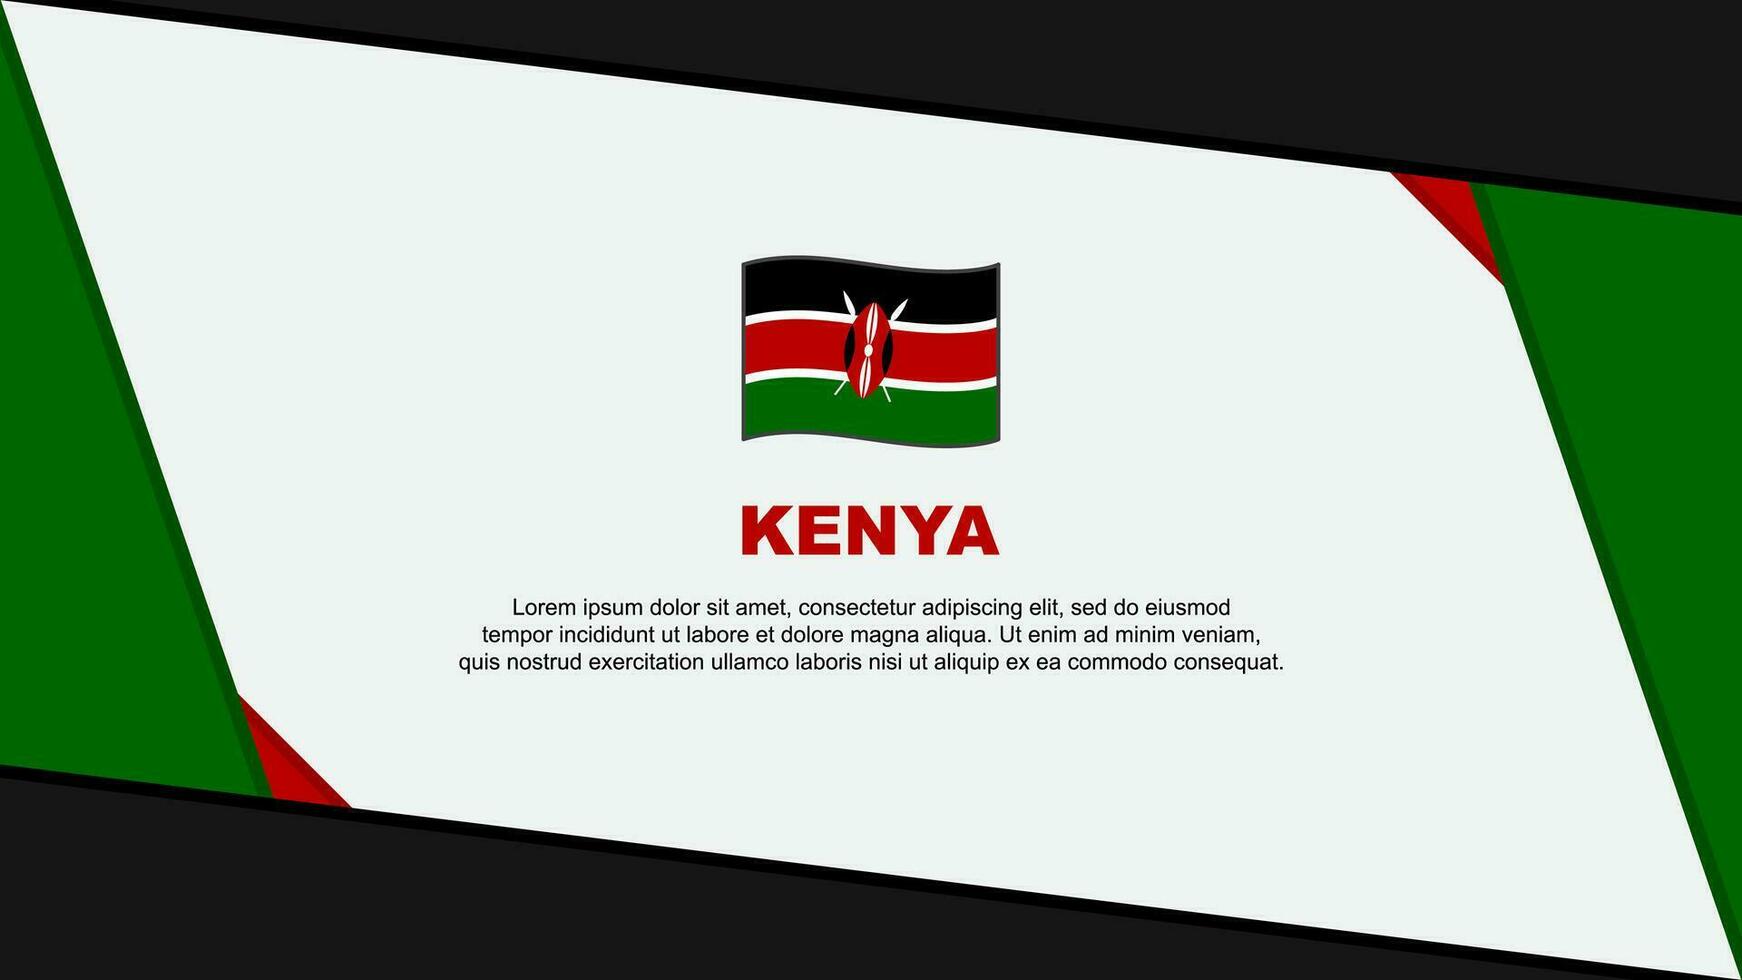 Kenya Flag Abstract Background Design Template. Kenya Independence Day Banner Cartoon Vector Illustration. Kenya Independence Day